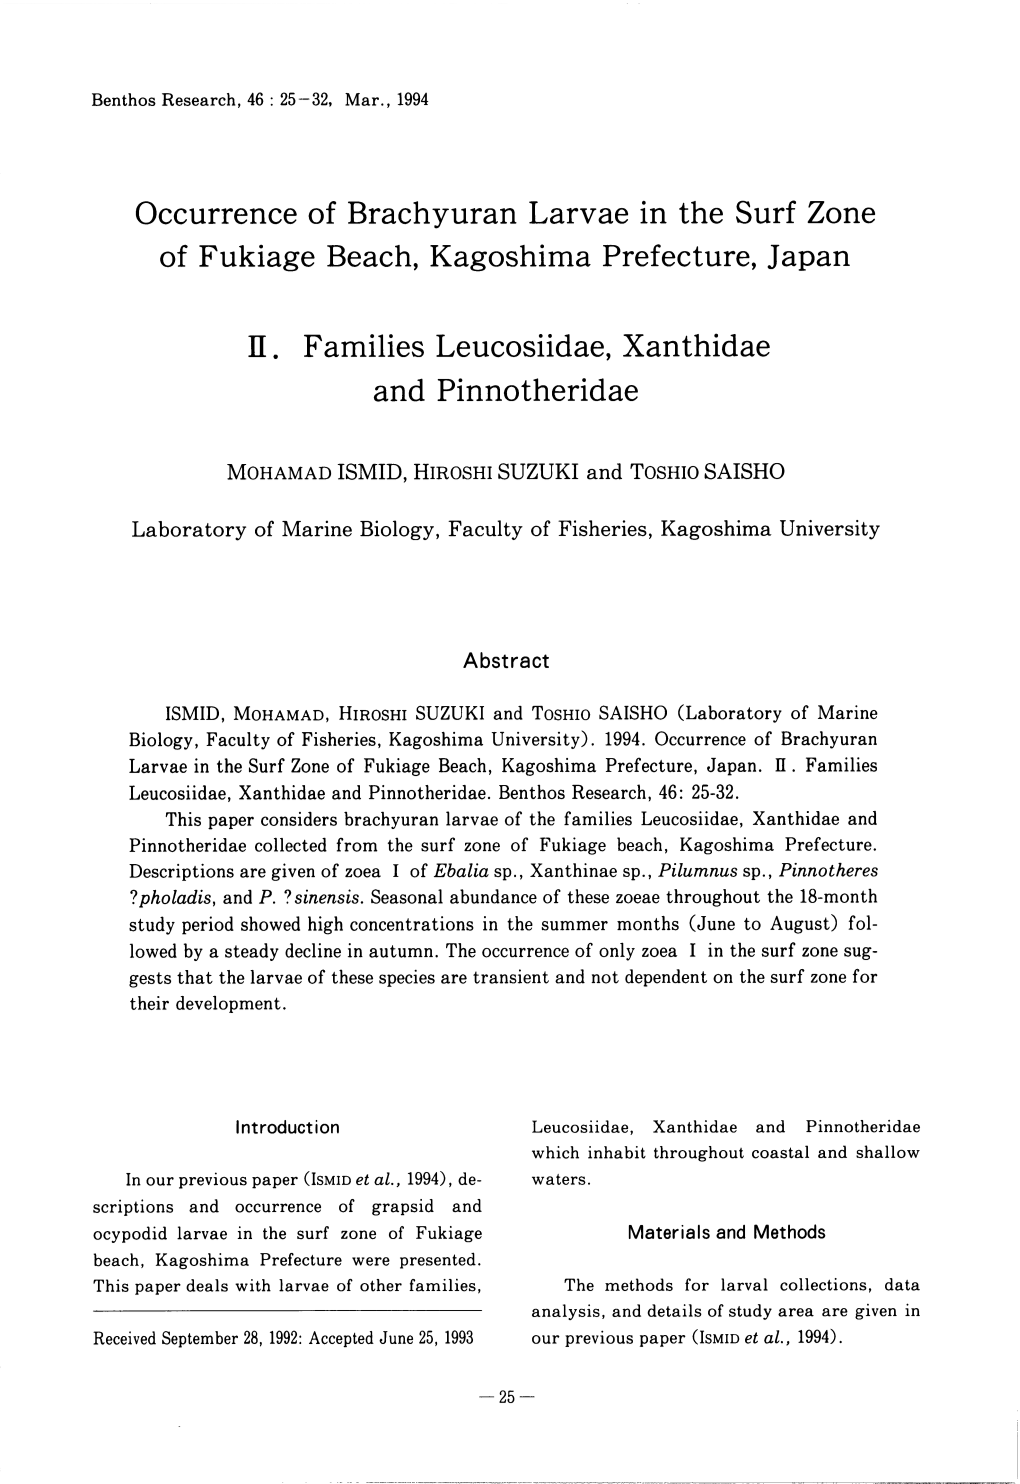 Occurrence of Brachyuran Larvae in the Surf Zone of Fukiage Beach, Kagoshima Prefecture, Japan II. Families Leucosiidae, Xanthidae and Pinnotheridae